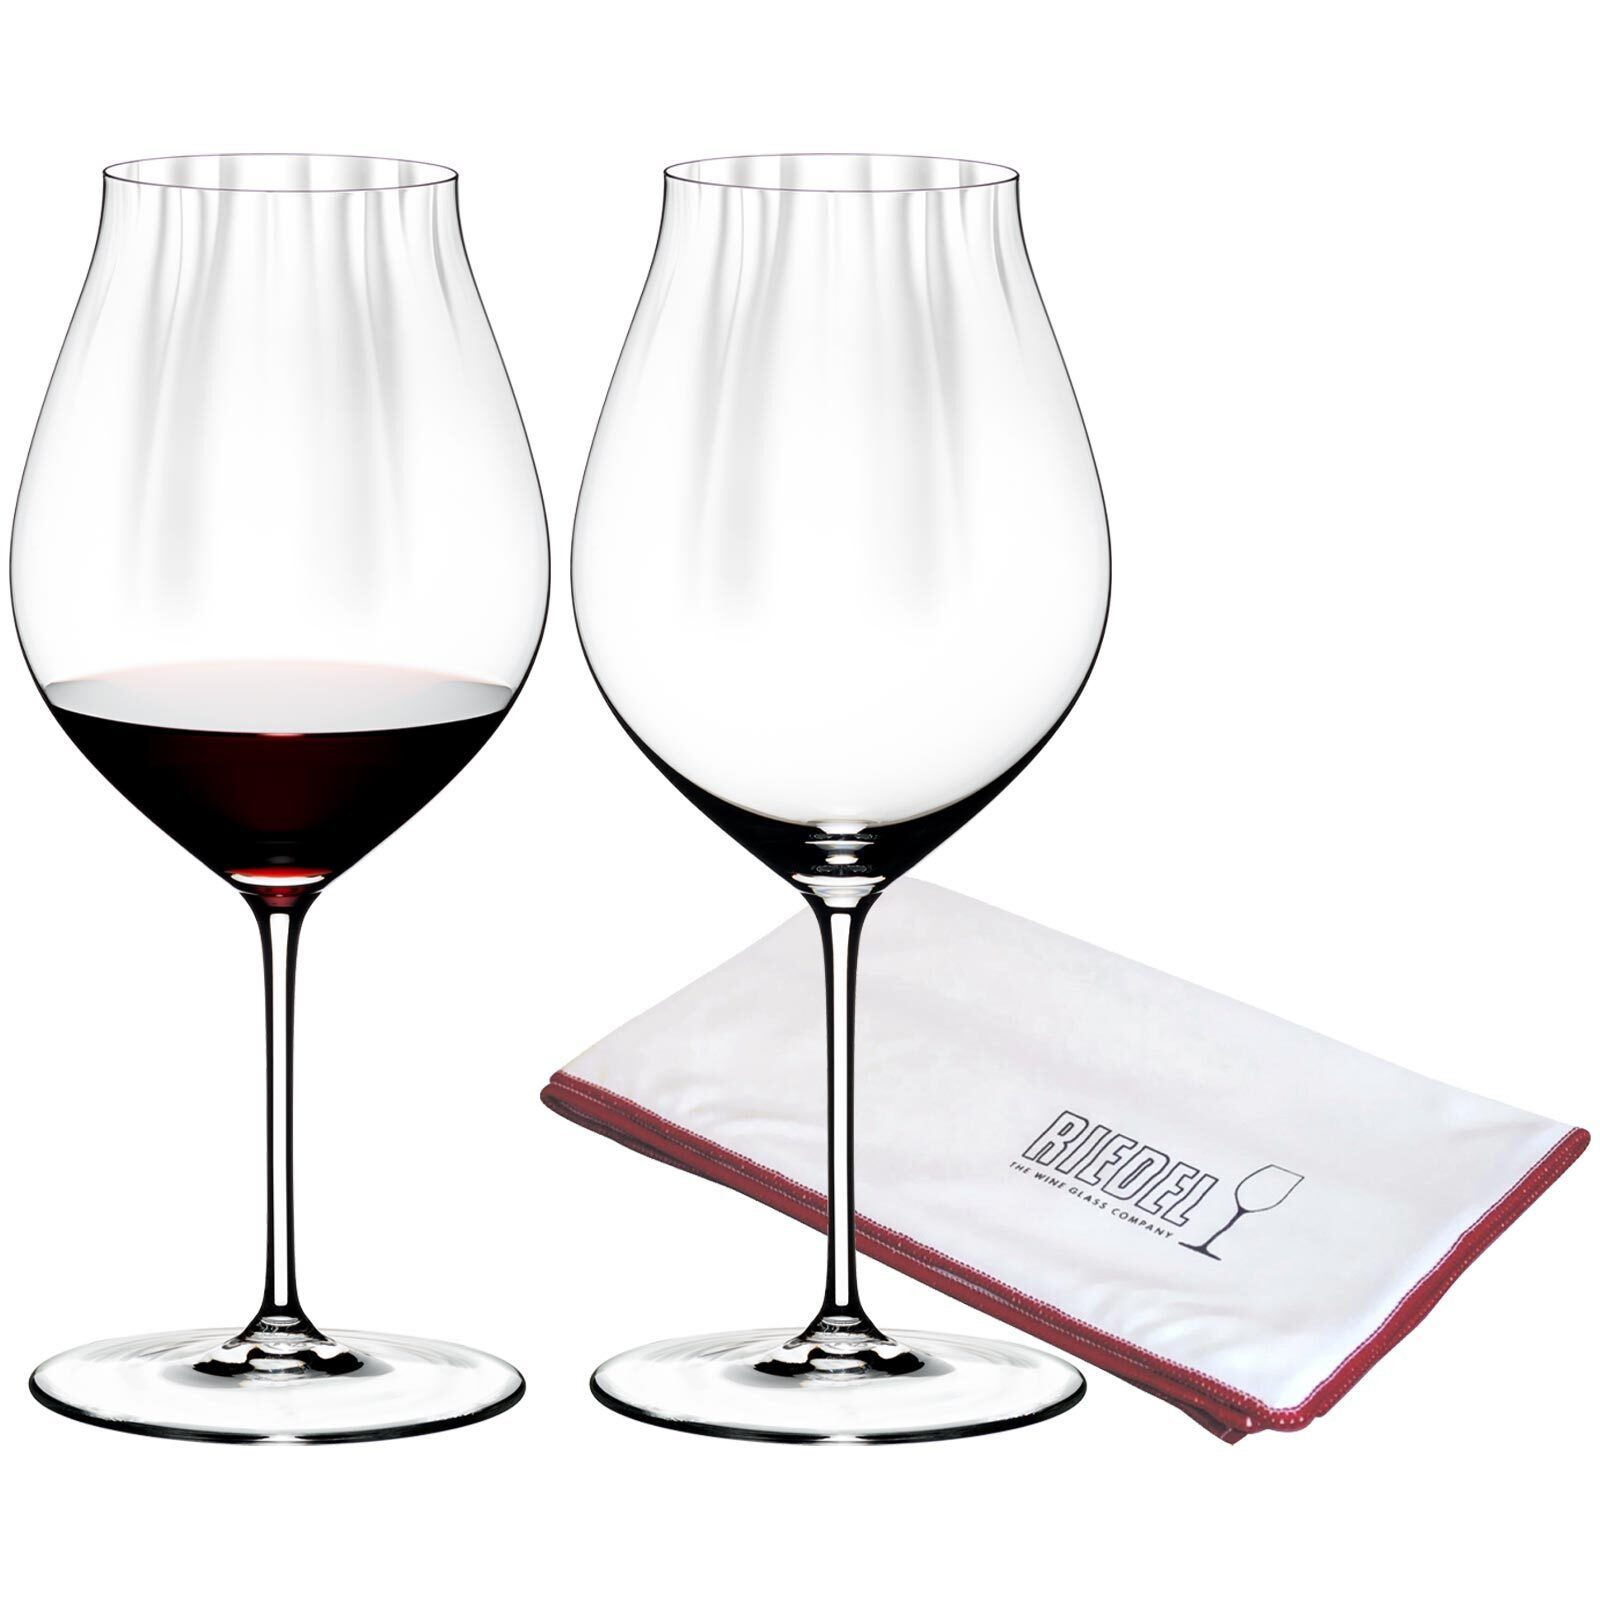 RIEDEL THE WINE GLASS COMPANY Rotweinglas Performance Pinot Noir Gläser inklusive Poliertuch, Glas